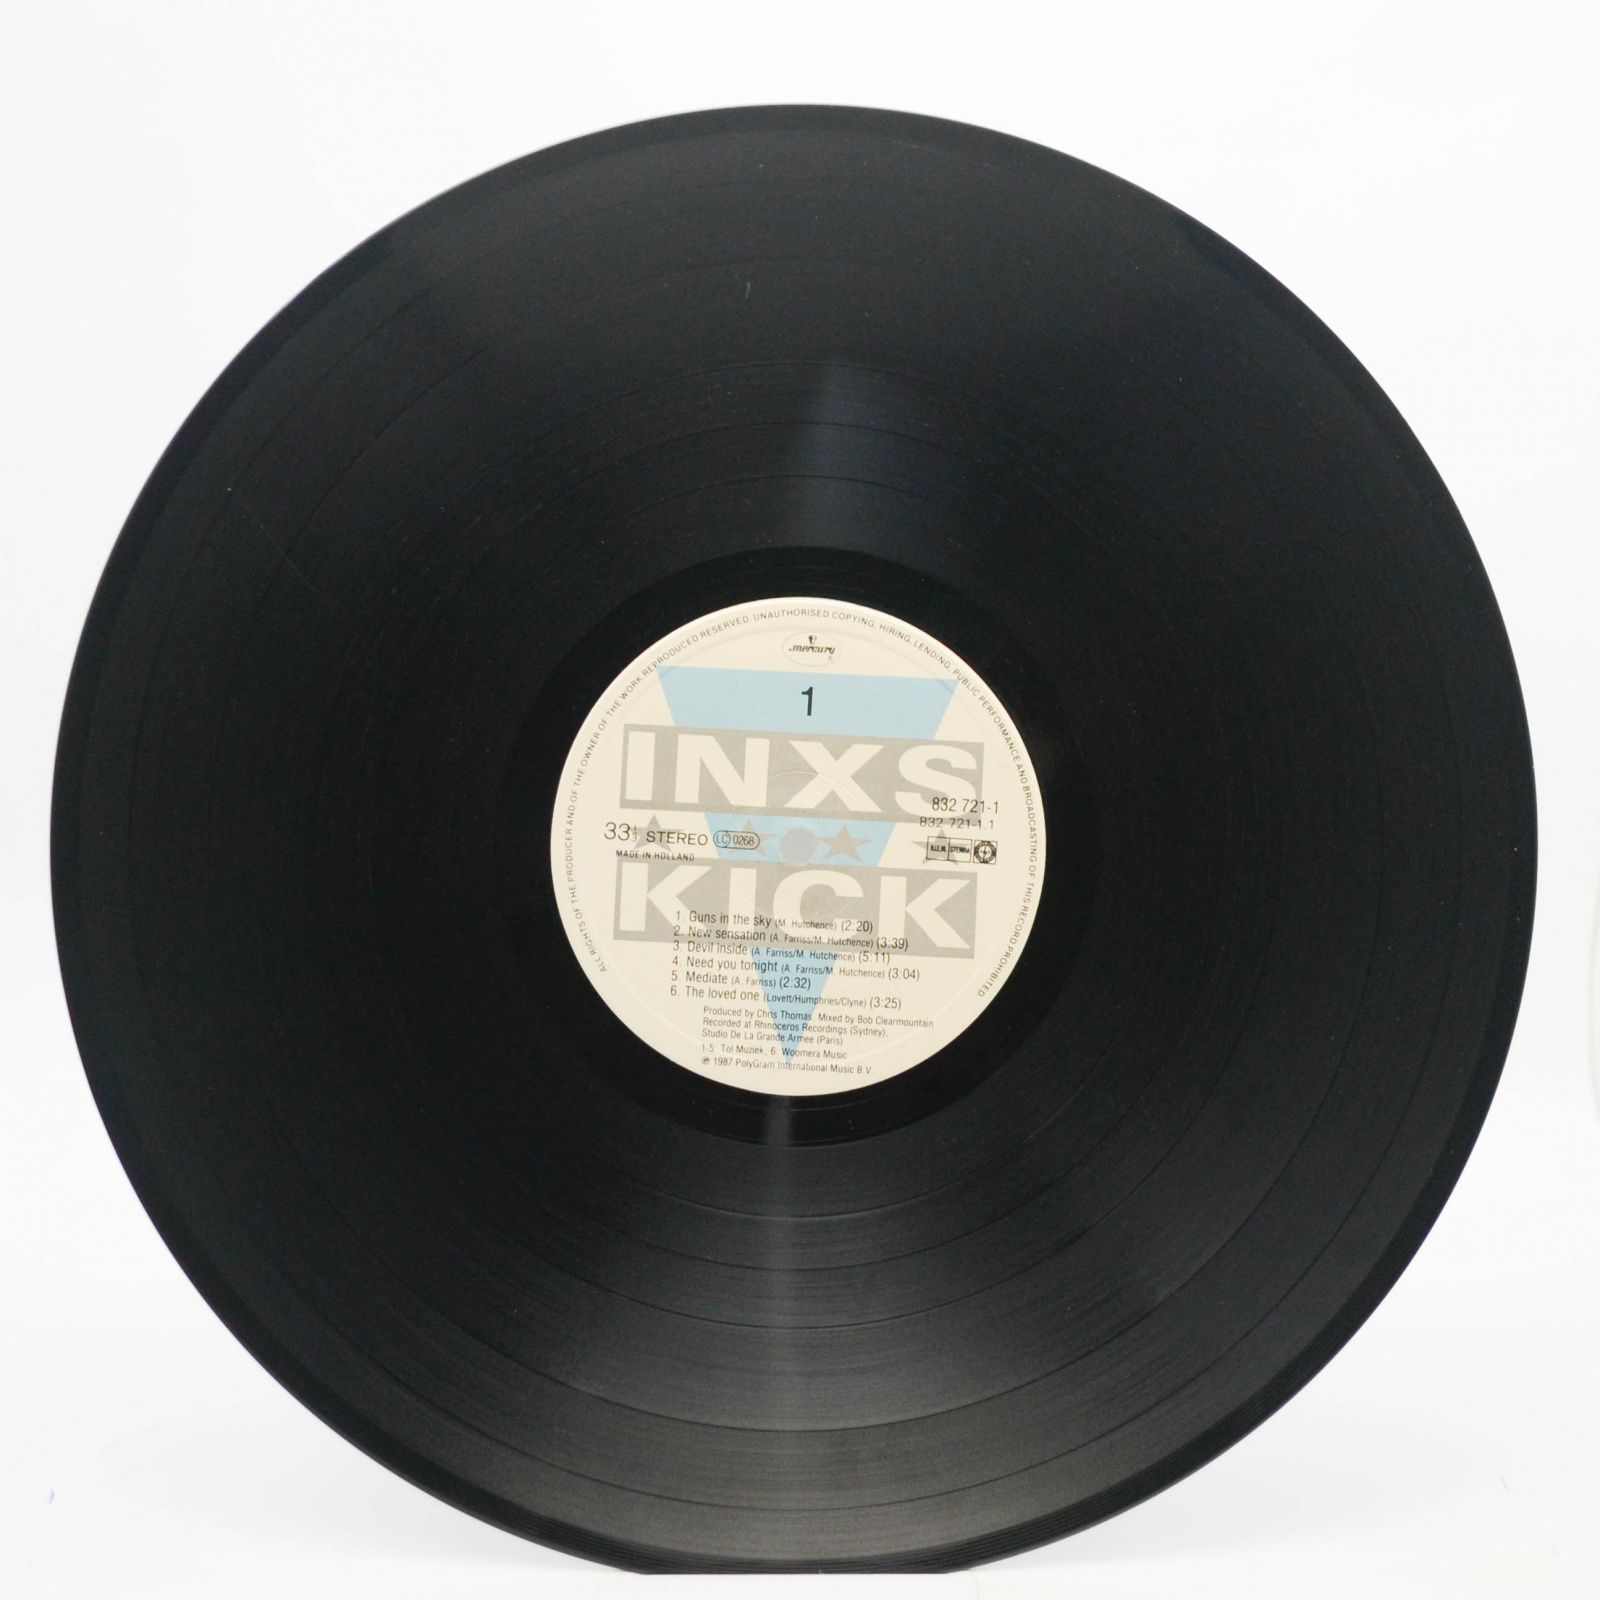 INXS — Kick, 1987